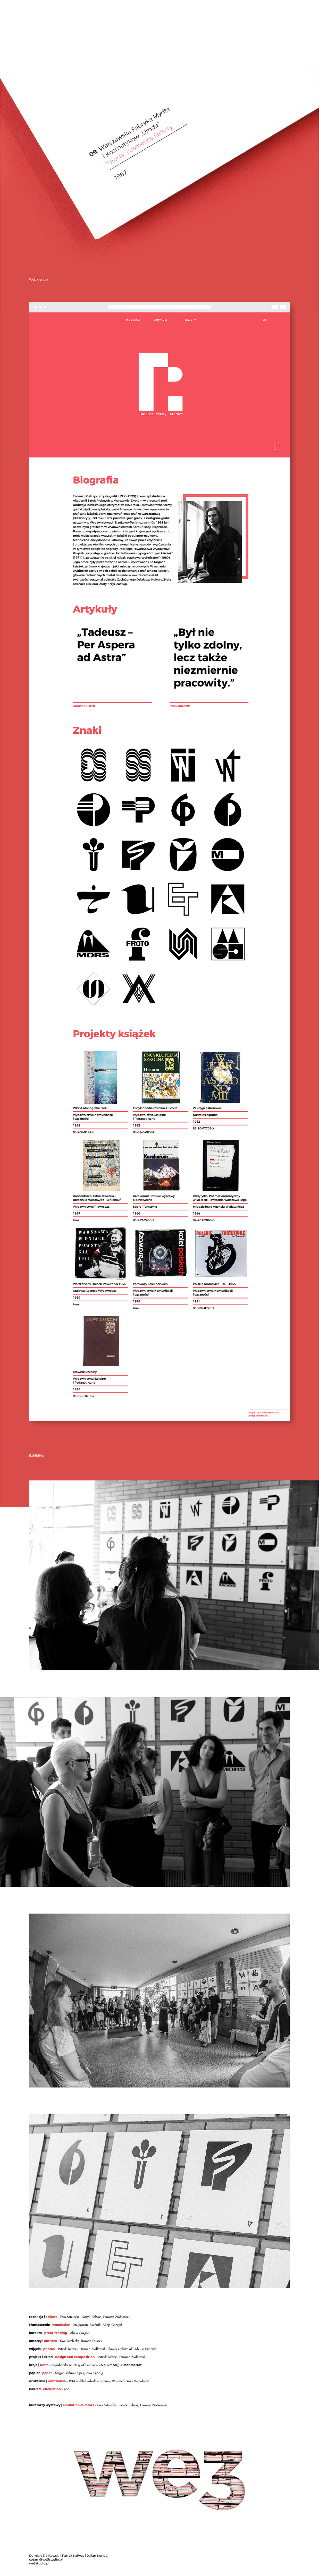 print Catolgue pietrzyk Archive book design brand screen print warsaw